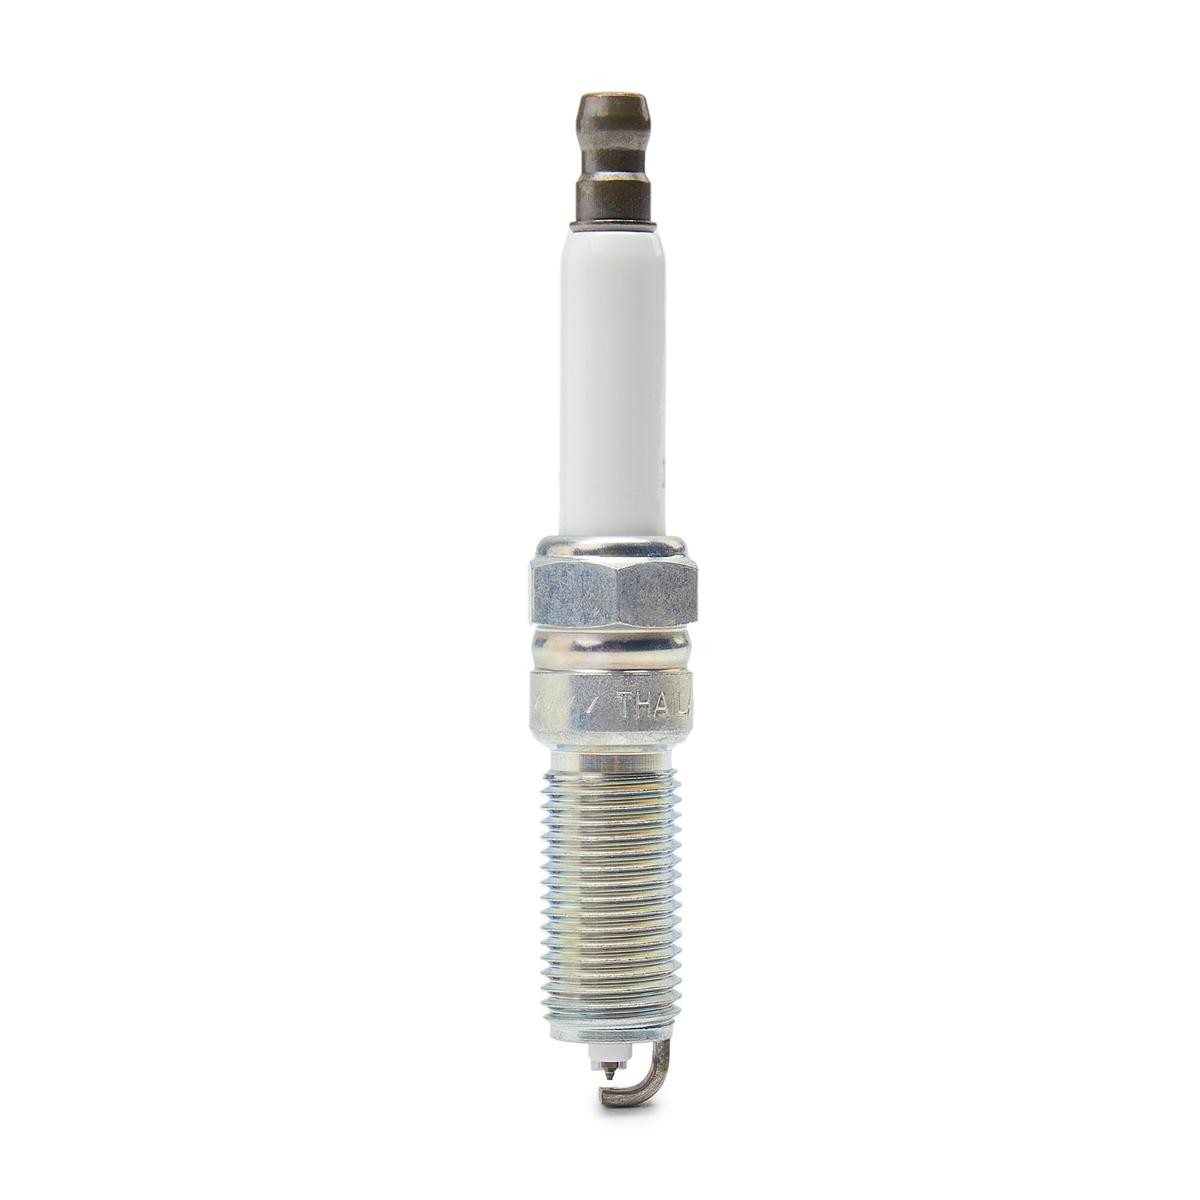 Ignition and glowplug system Spark Plug 91970